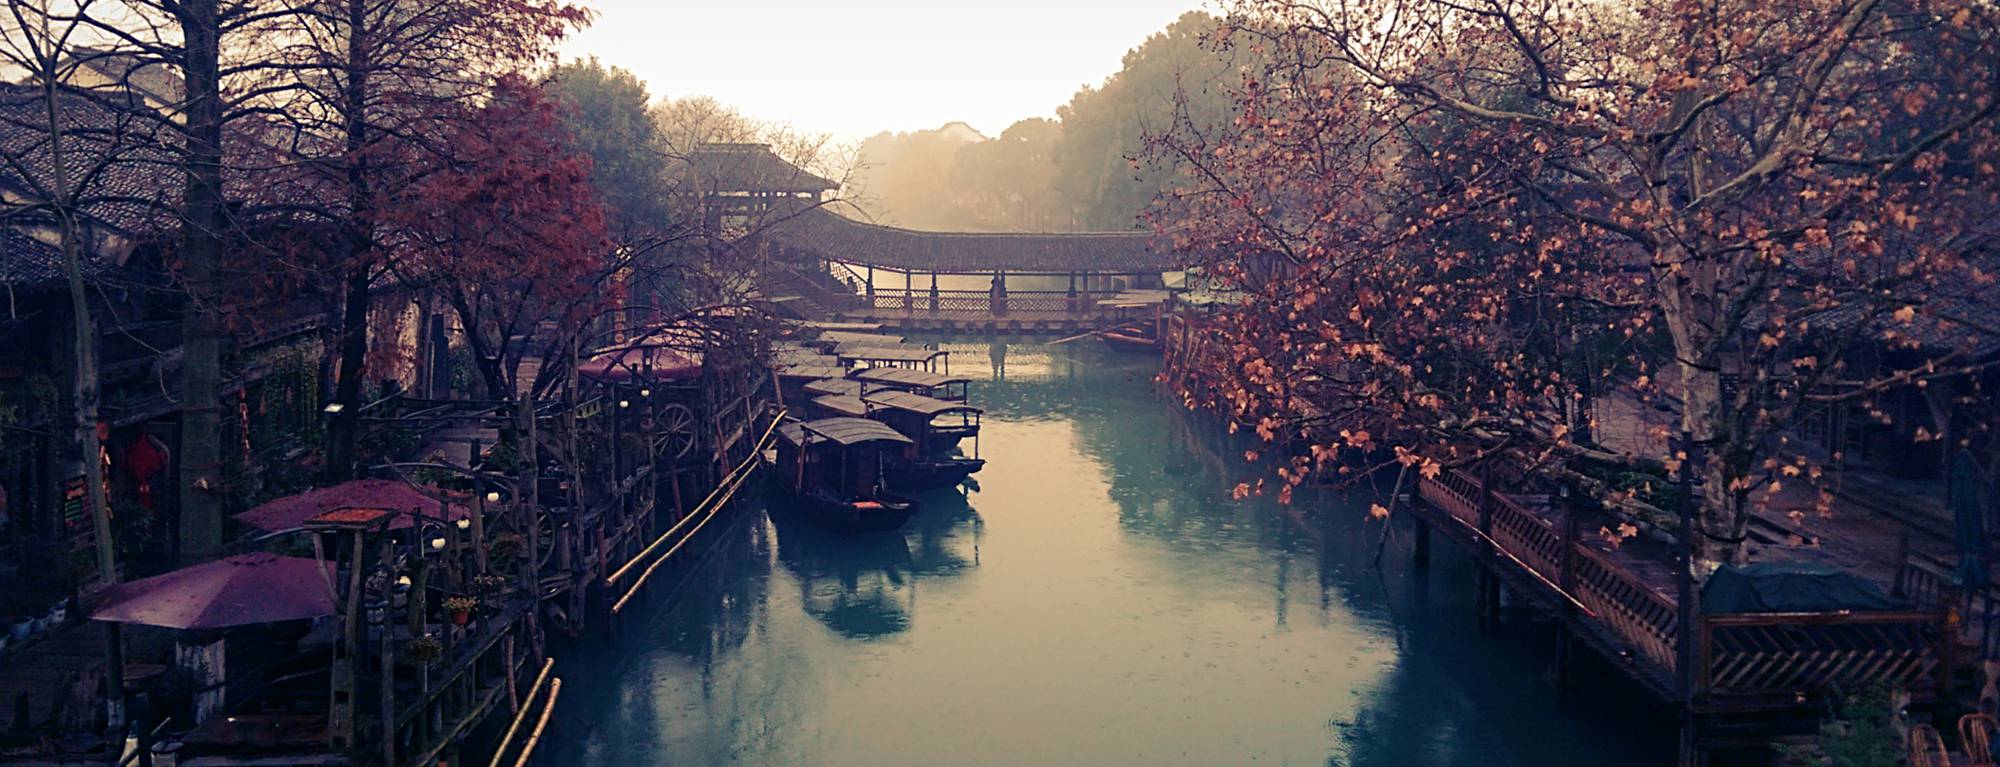 Scenic view of Wuzhen